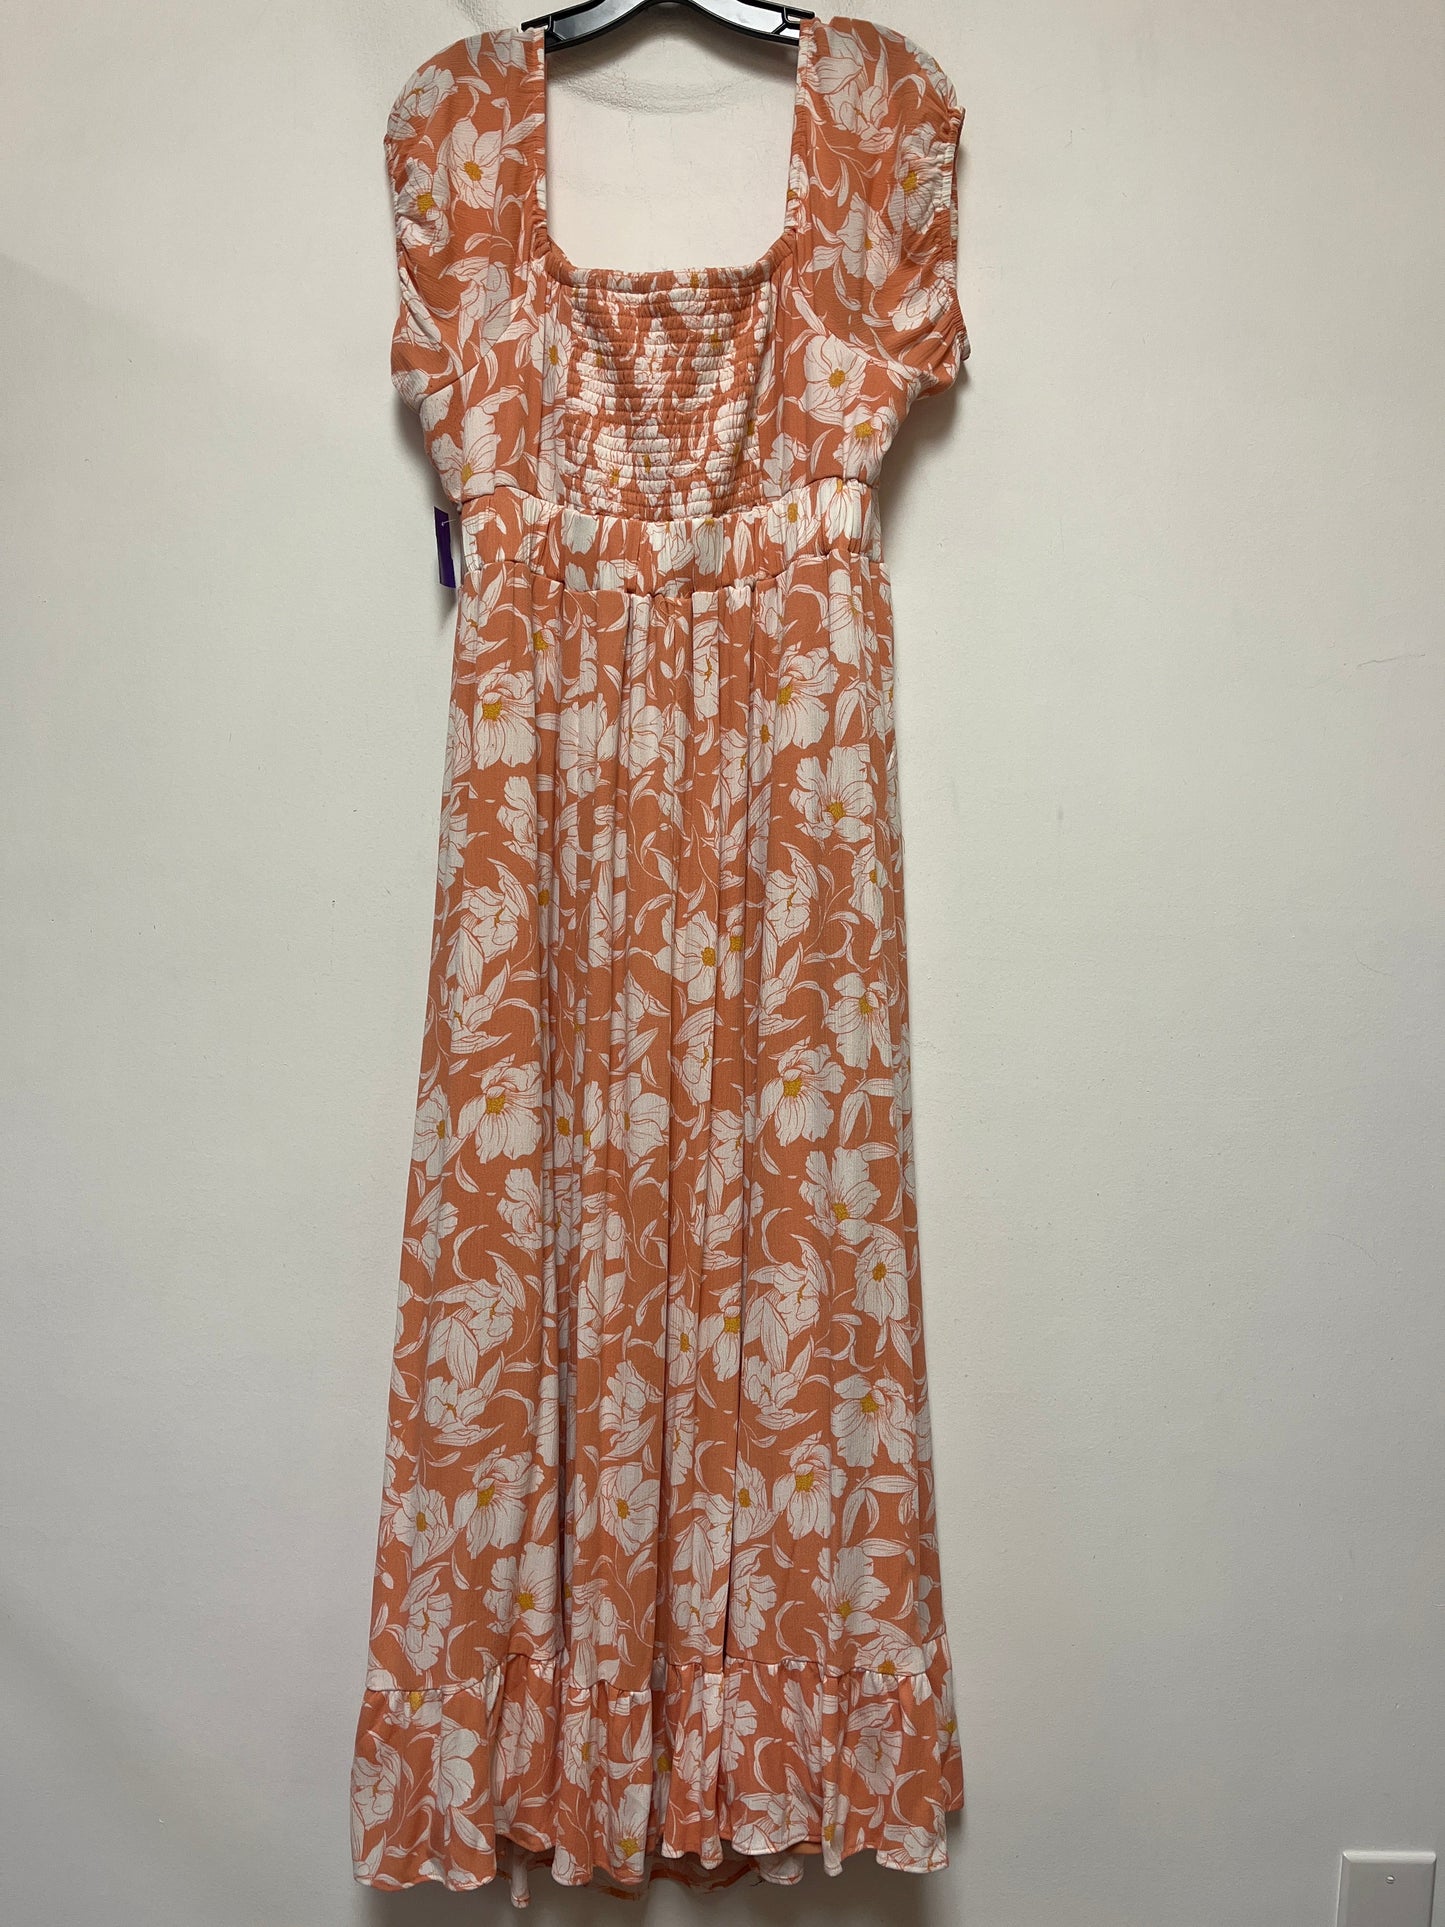 Floral Print Dress Casual Maxi Torrid, Size 1x